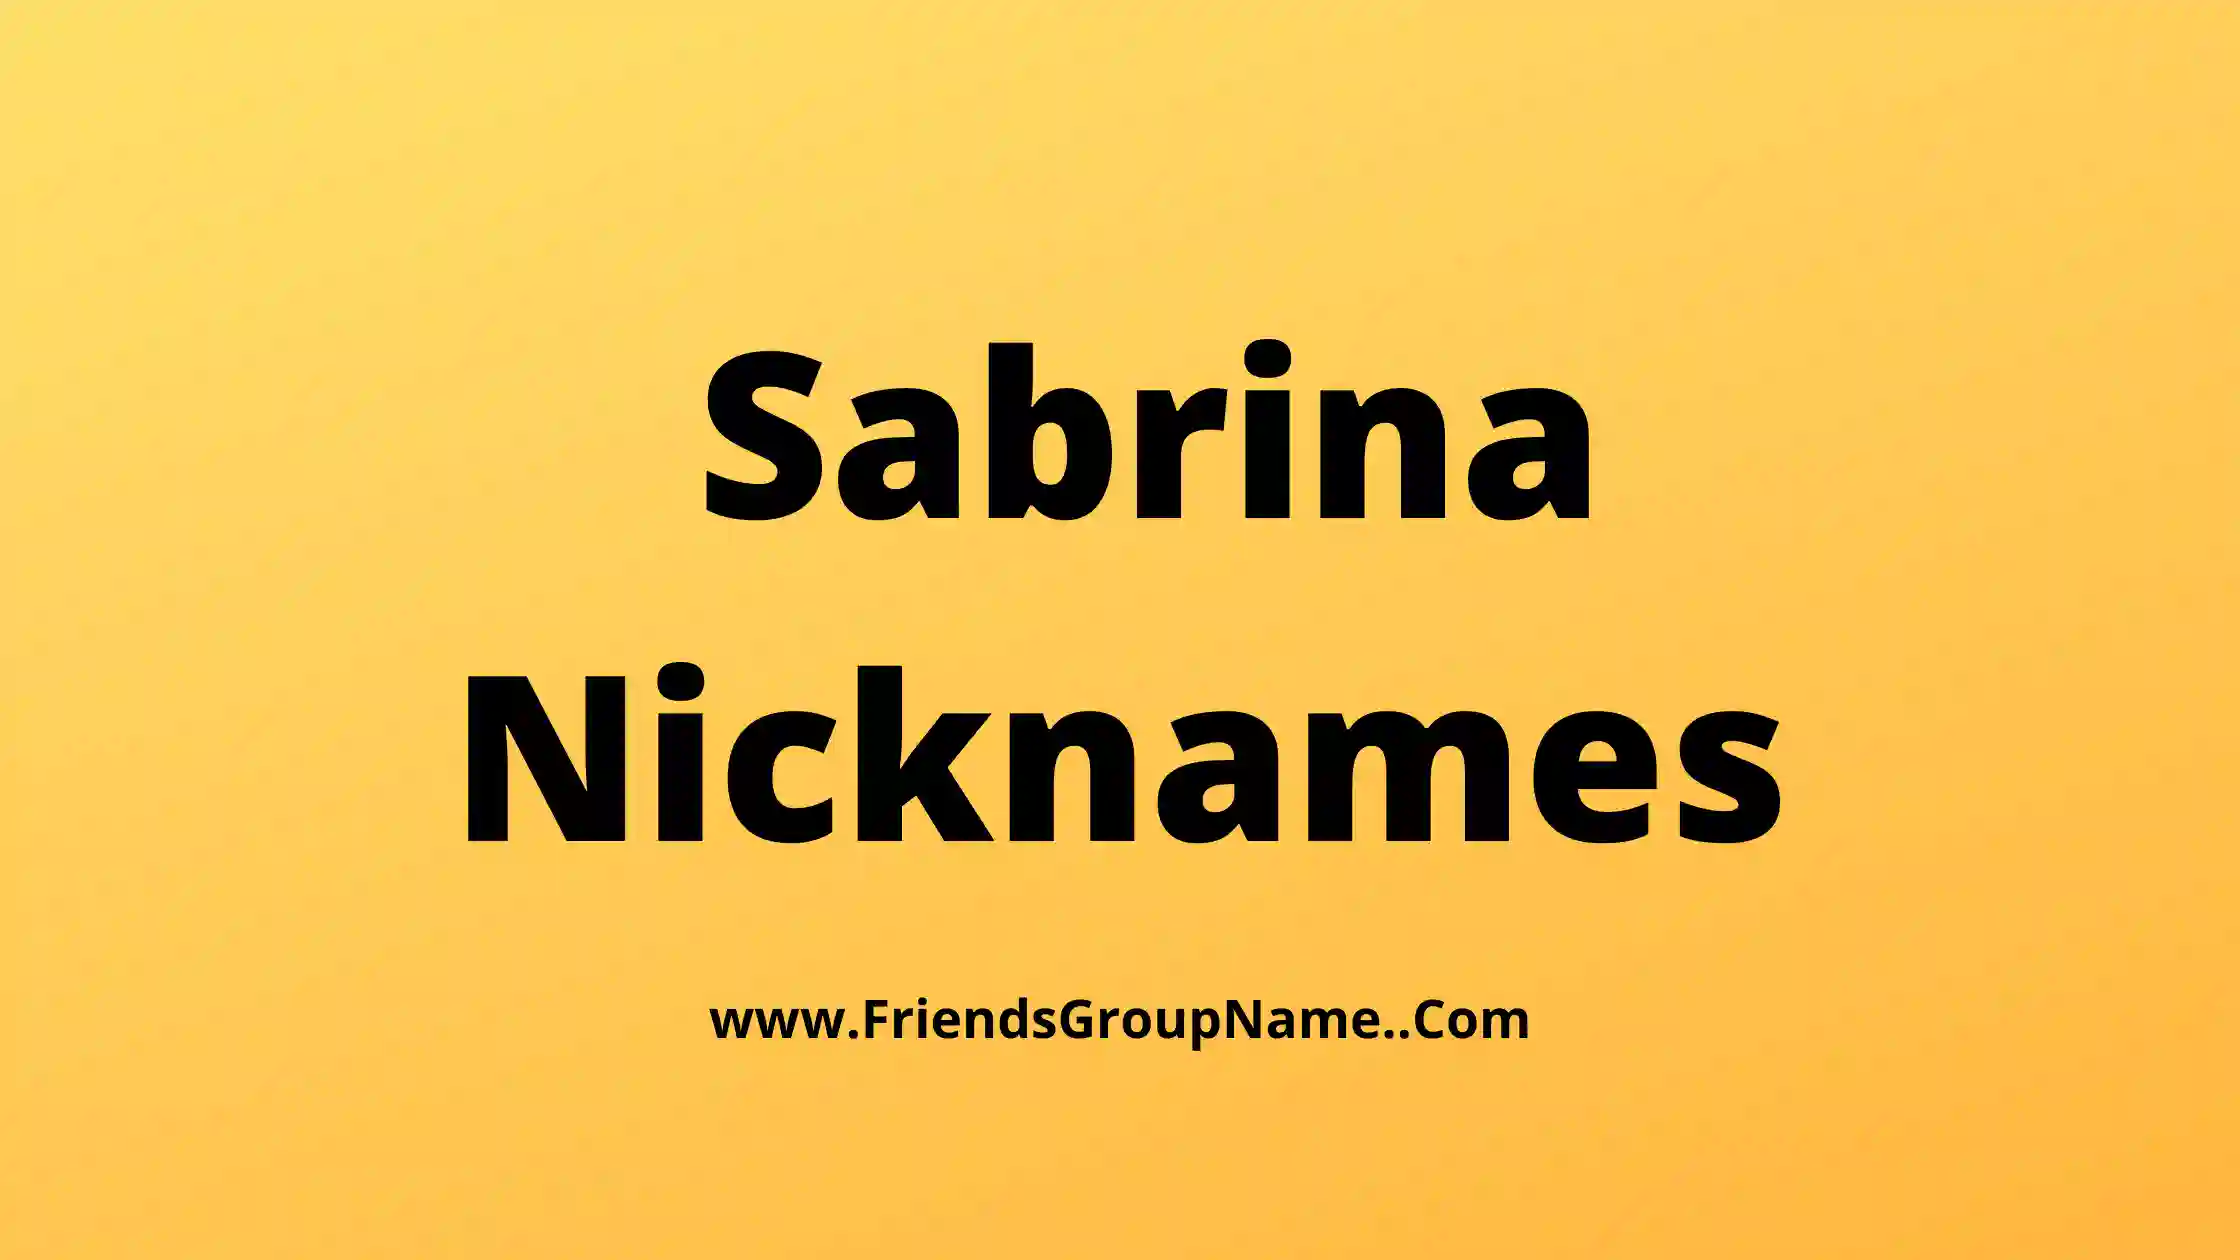 Sabrina Nicknames